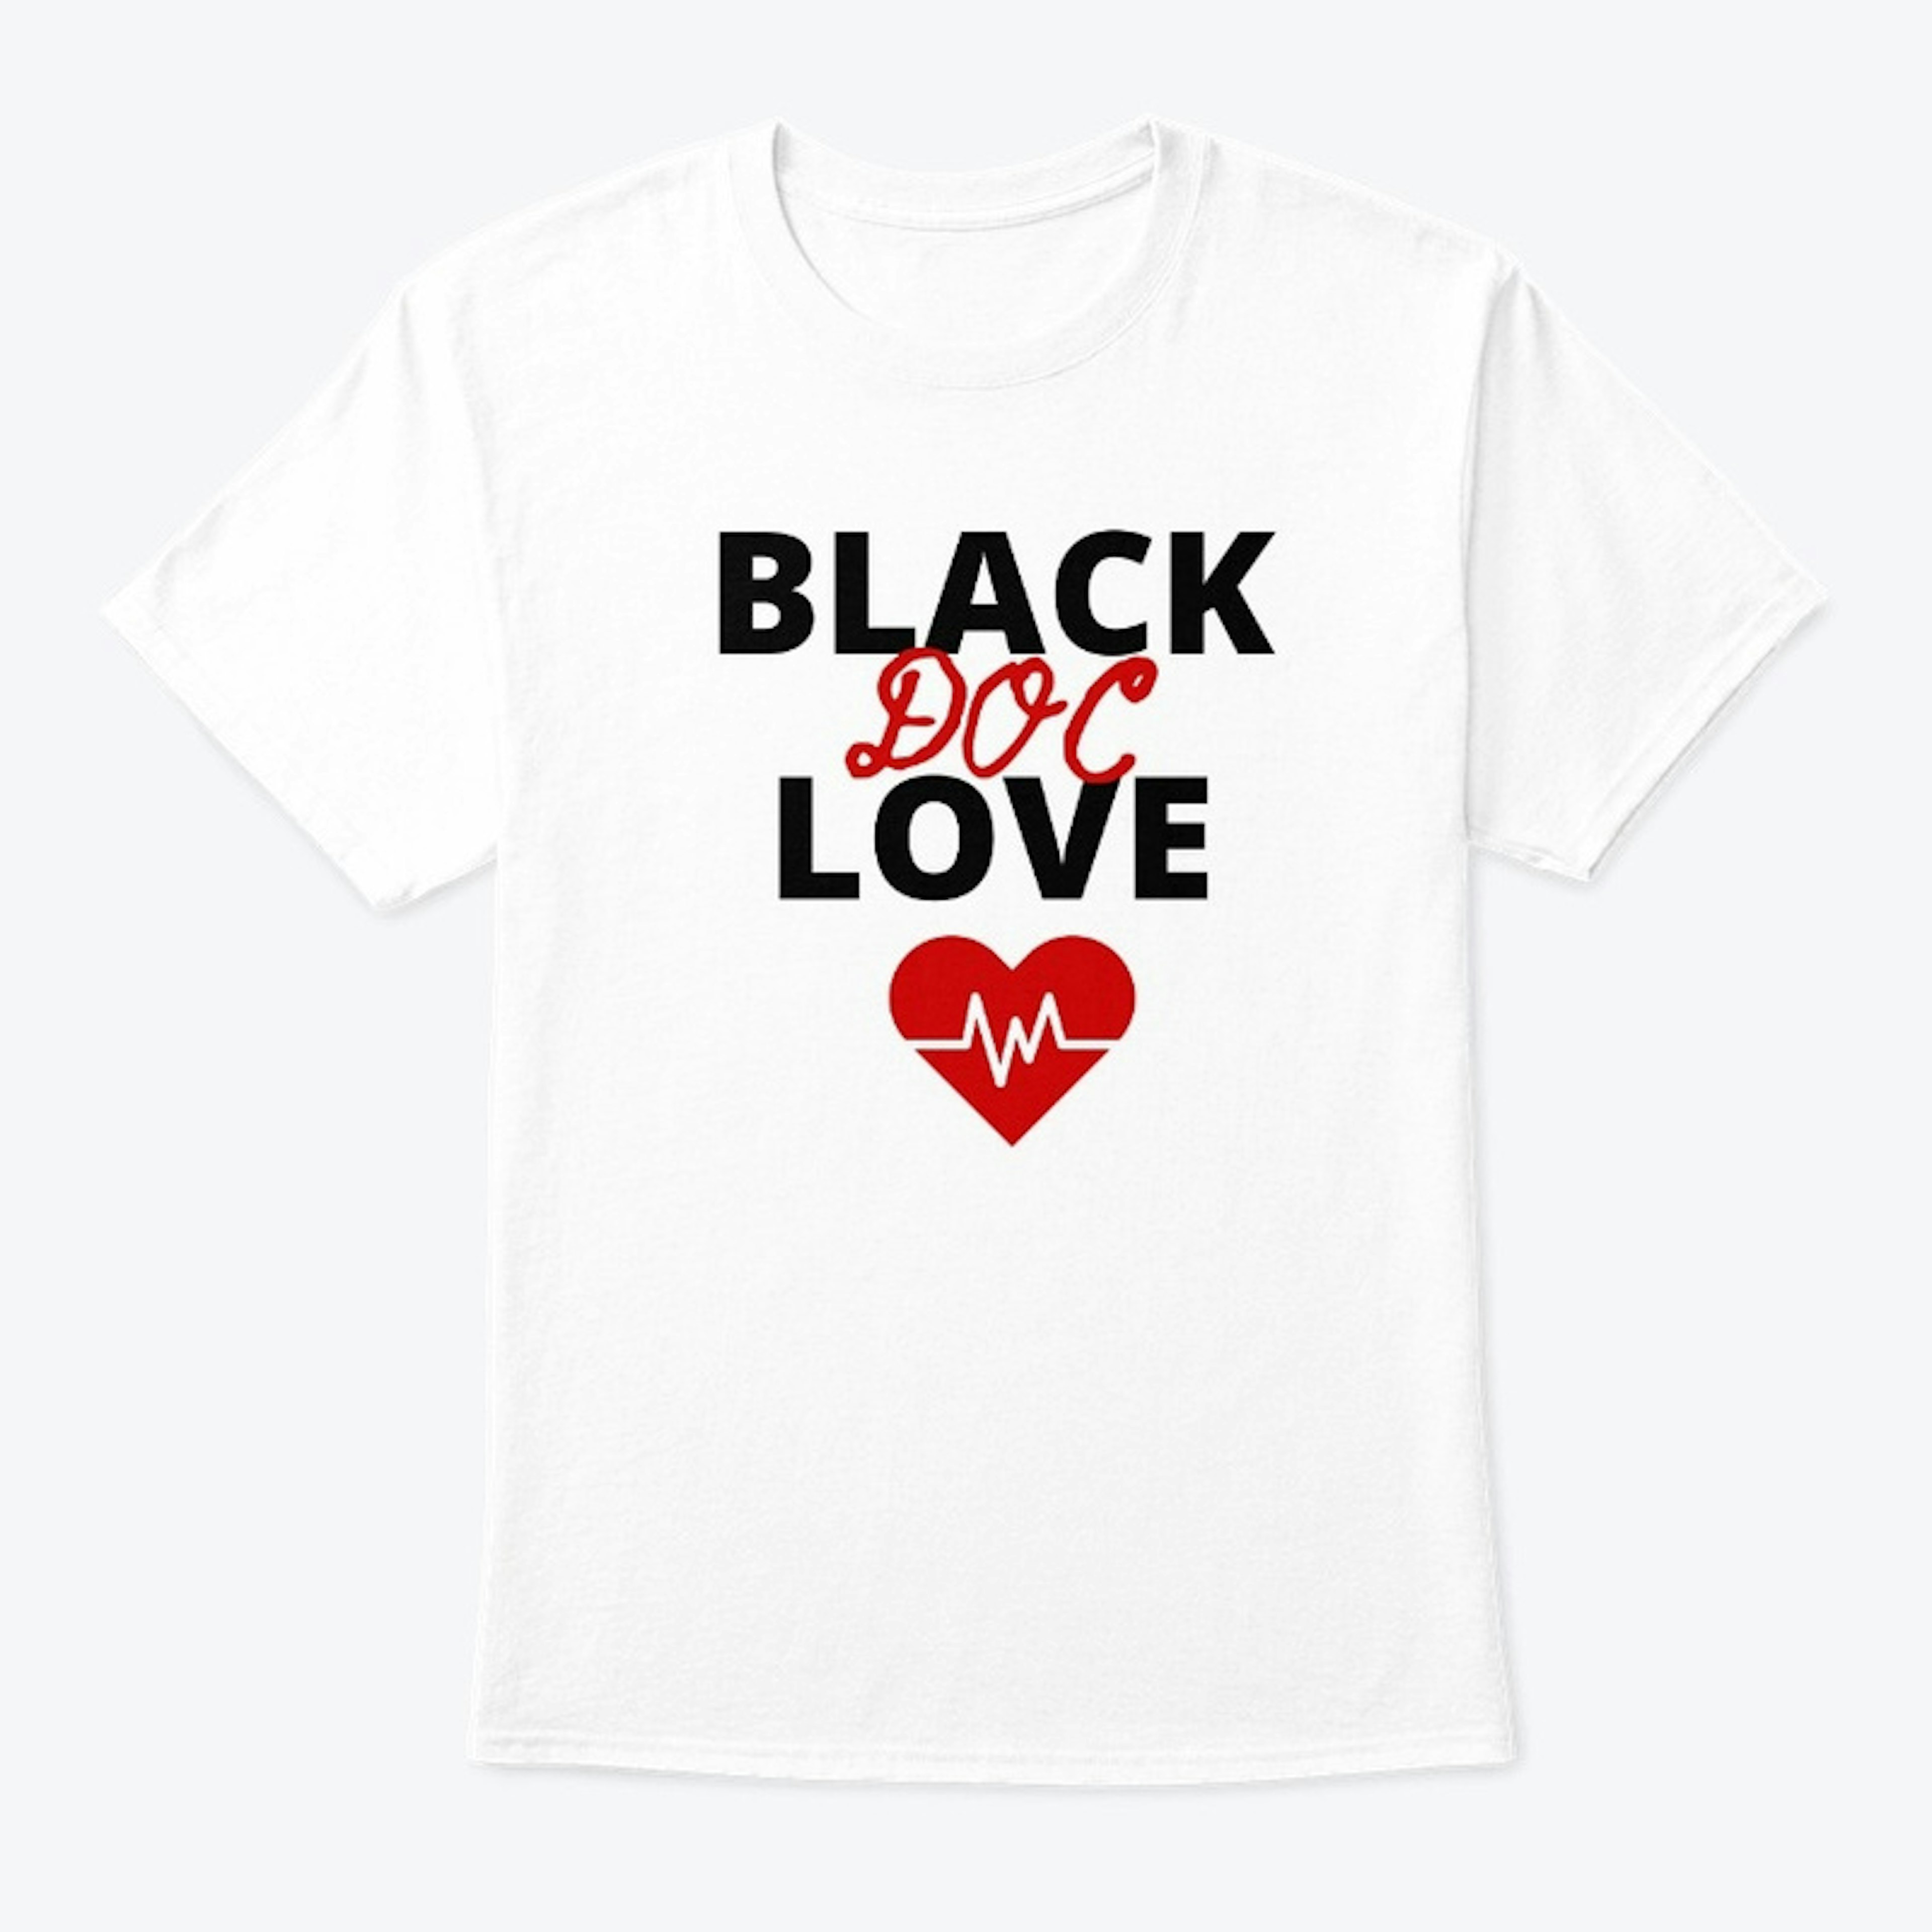 Black Doc Love